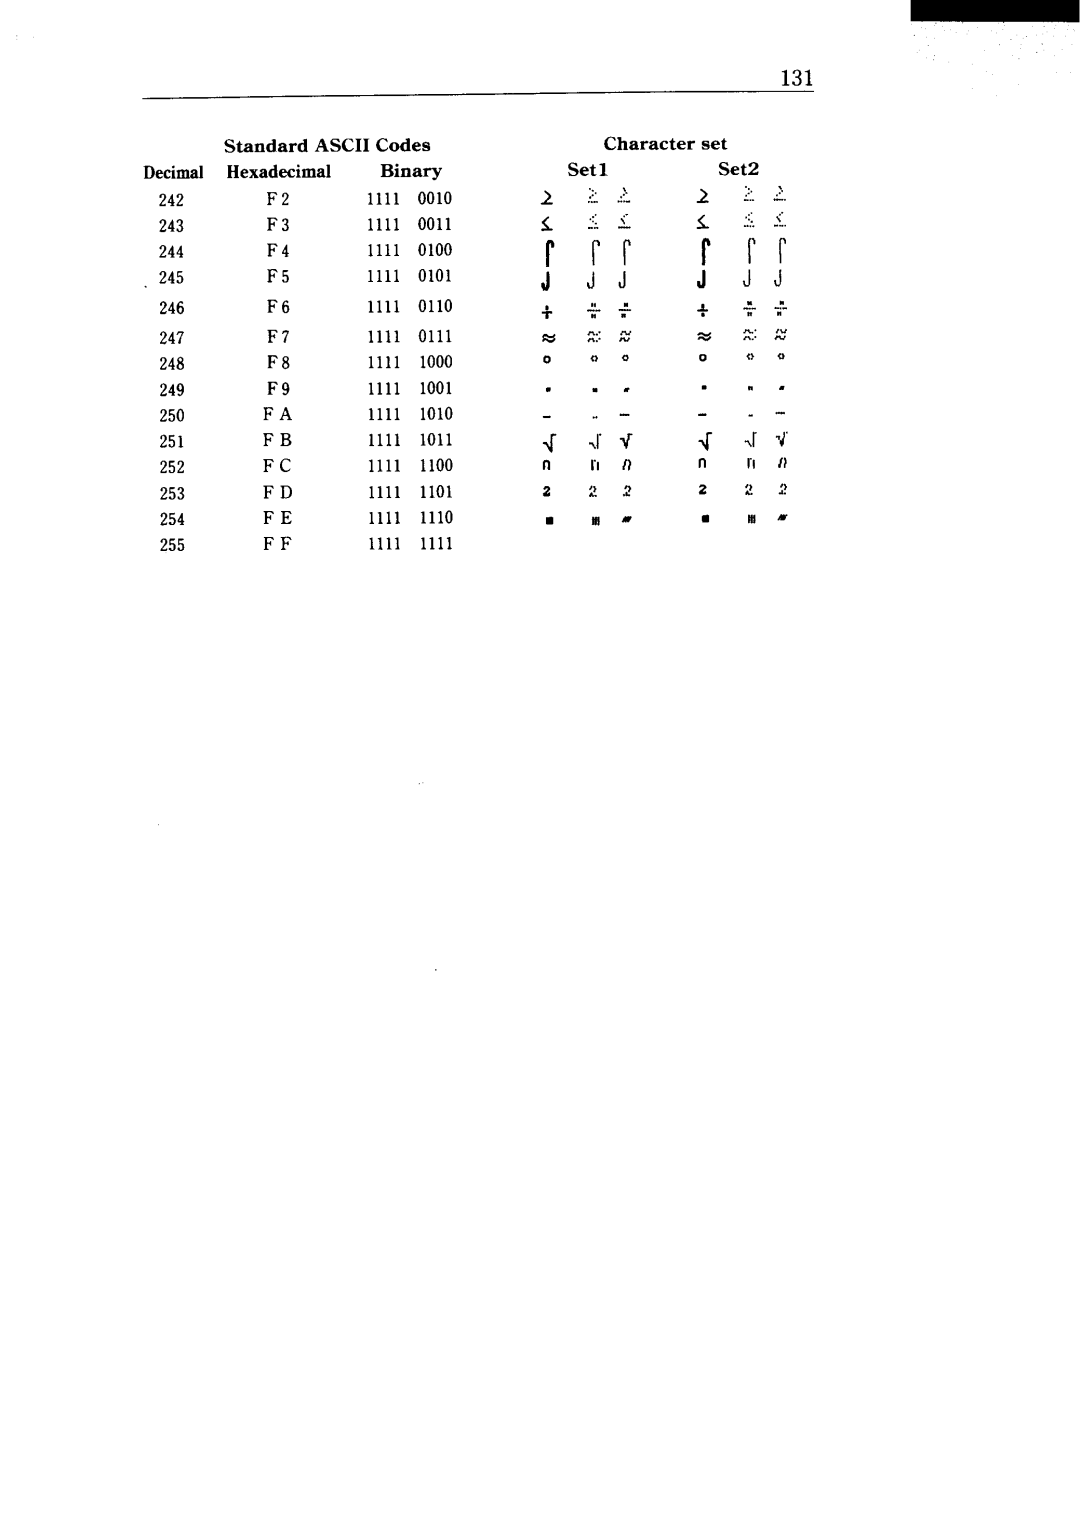 Star Micronics NX-15 user manual StandardASCIICodes Decimal Hexadecimal Binary, 252 FC 1111 253 FD 1111 254 FE 1111 255 FF 